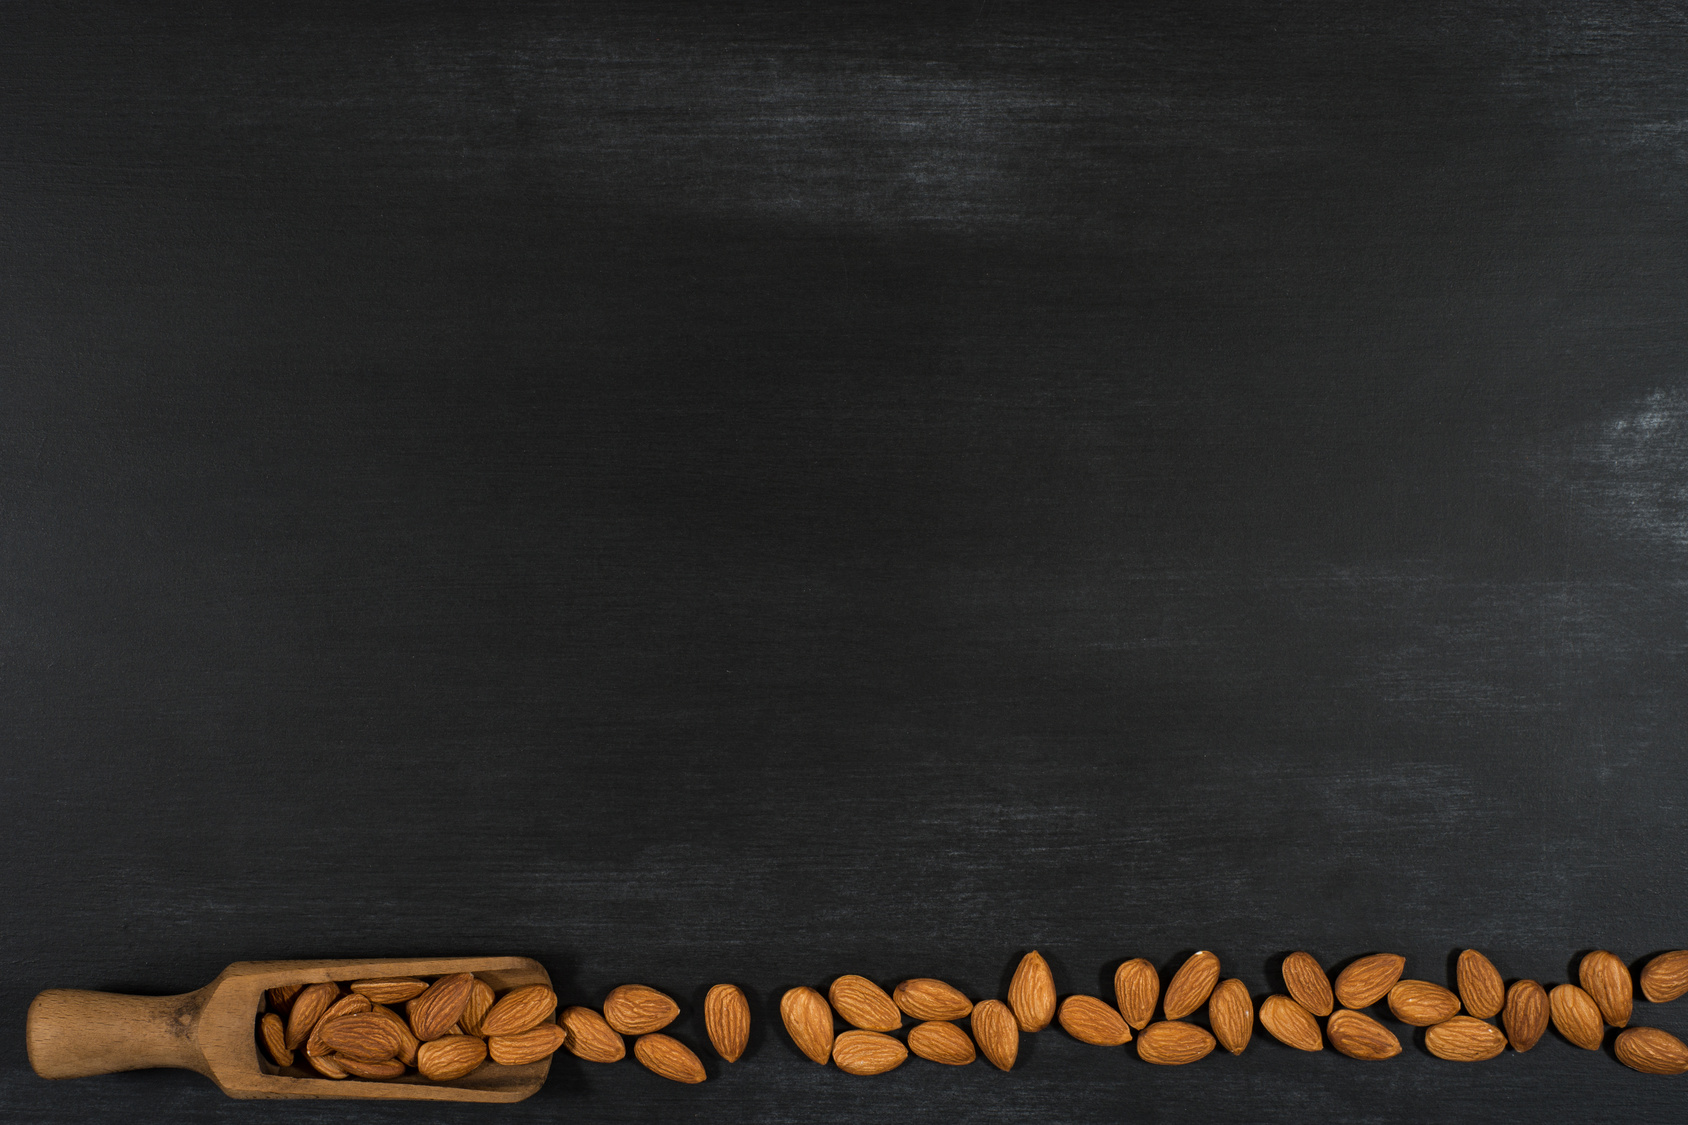 Almonds in a wooden scoop in a black chalkboard. Top view.